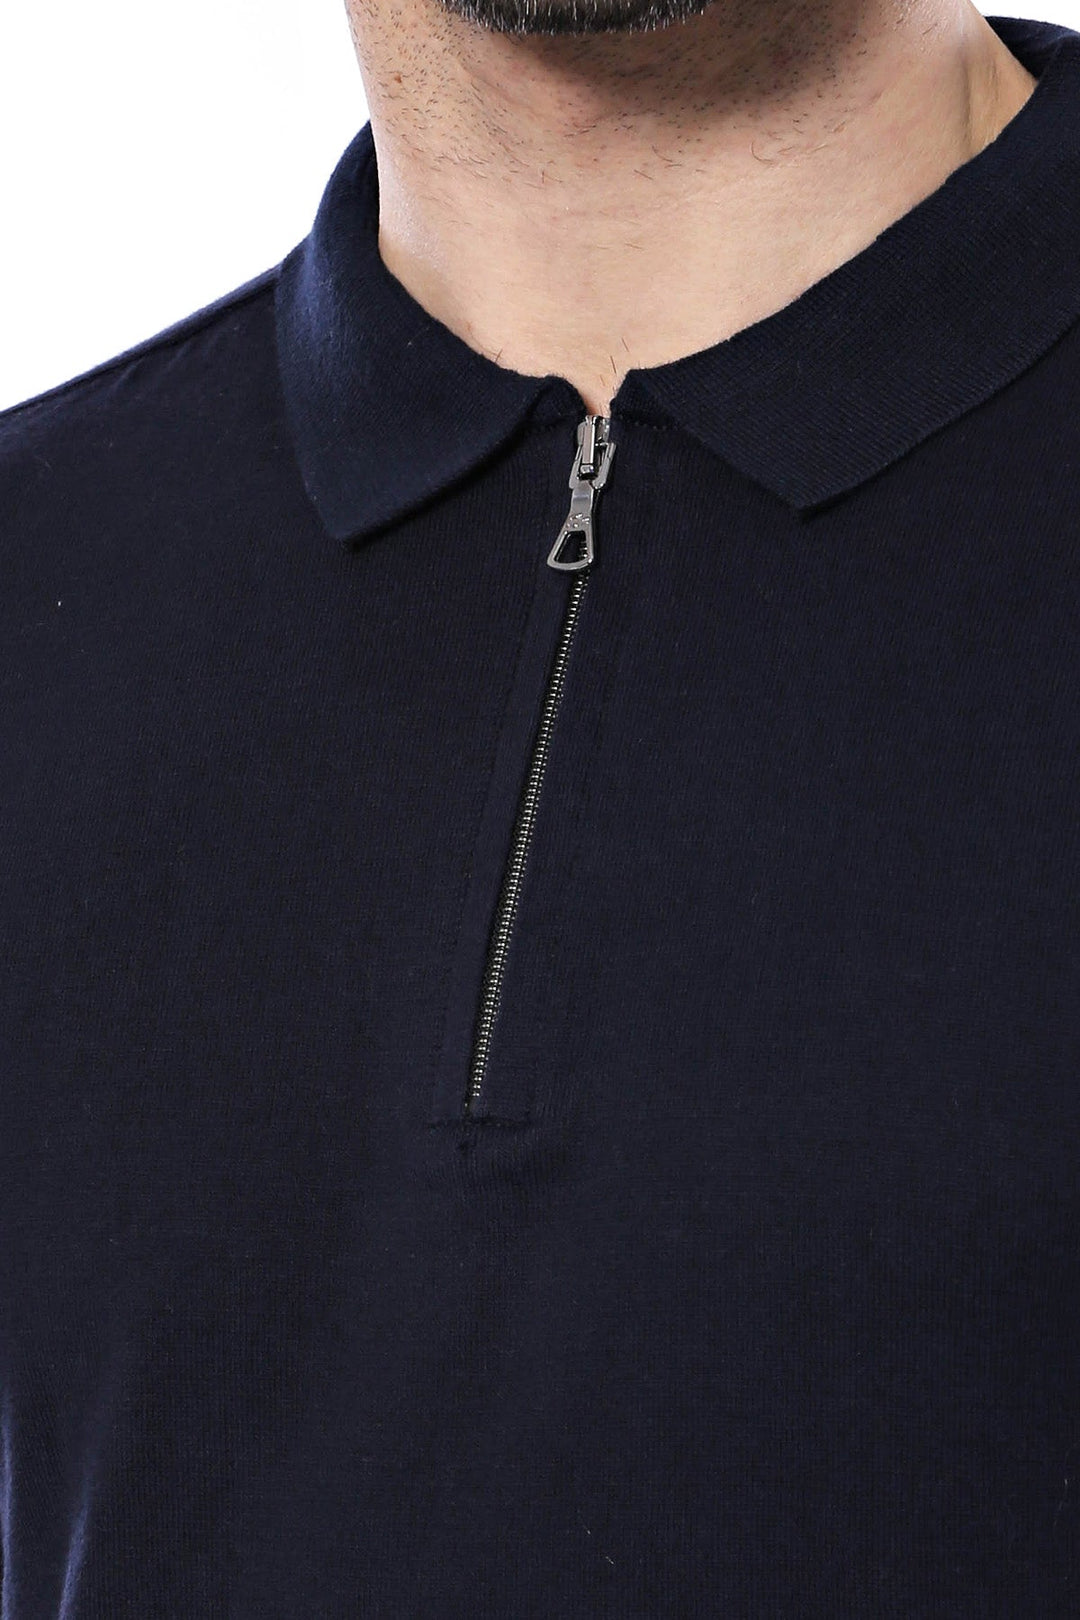 Polo Yaka Lacivert Düz Örme Erkek T-shirt - Wessi